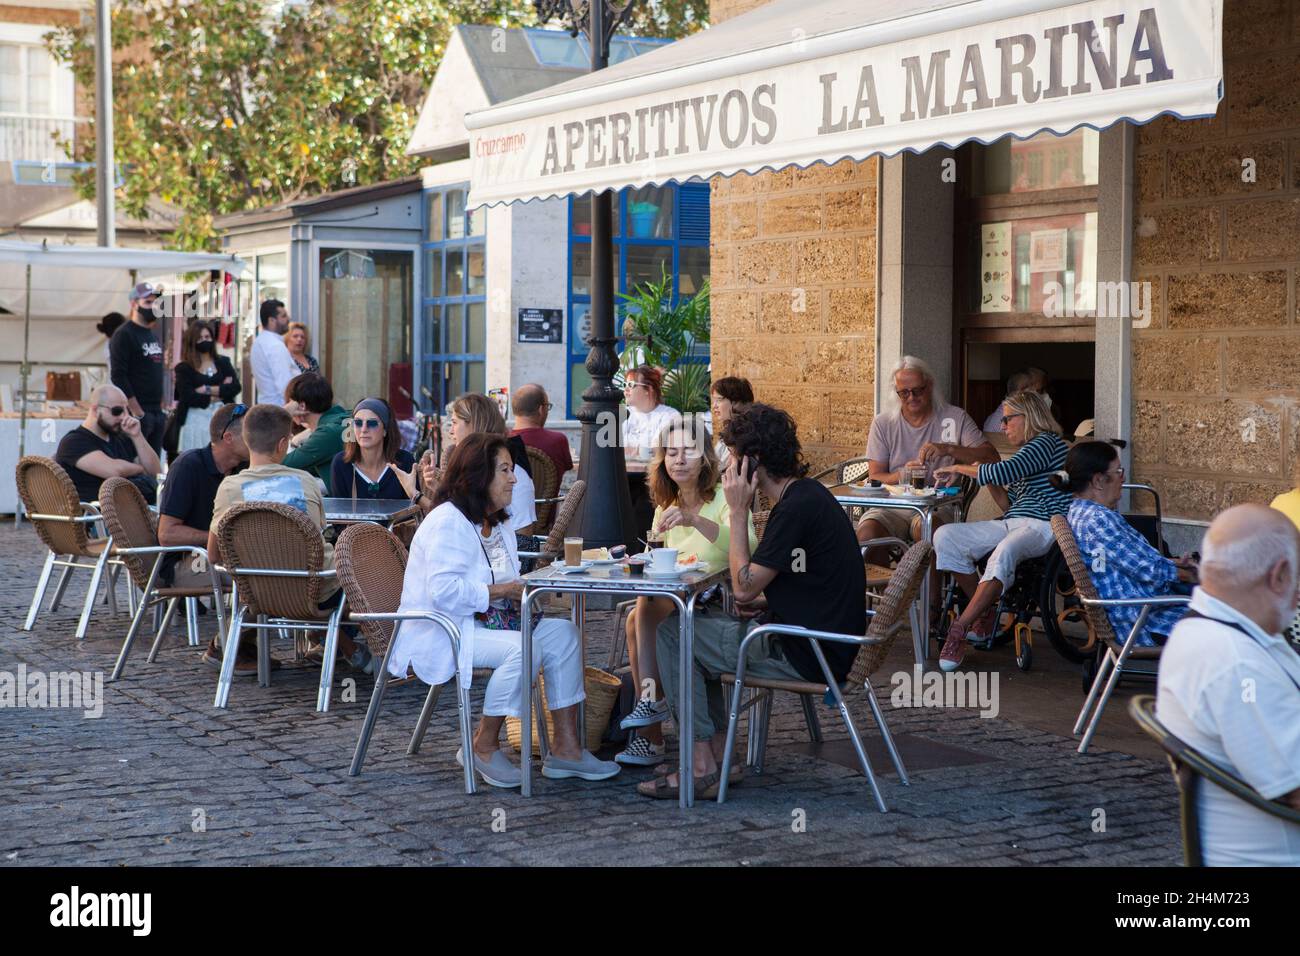 Aperitivos La Marina tapas bar & restaurant in Cadiz Stock Photo